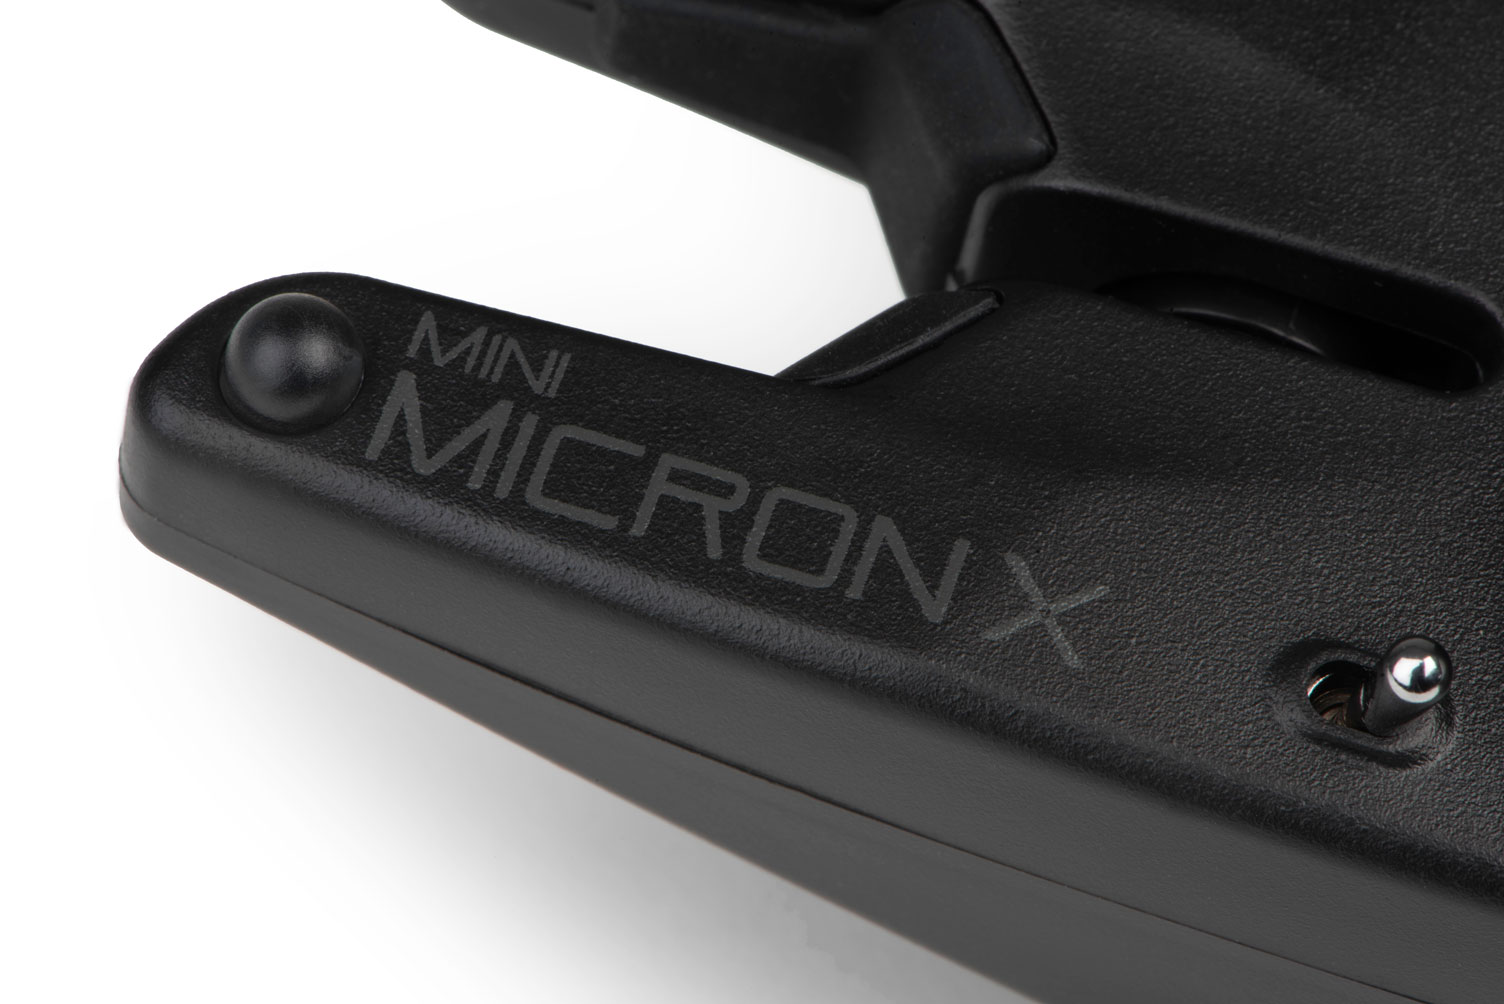 Fox Mini Micron X 2 Rod Beetmelder Set